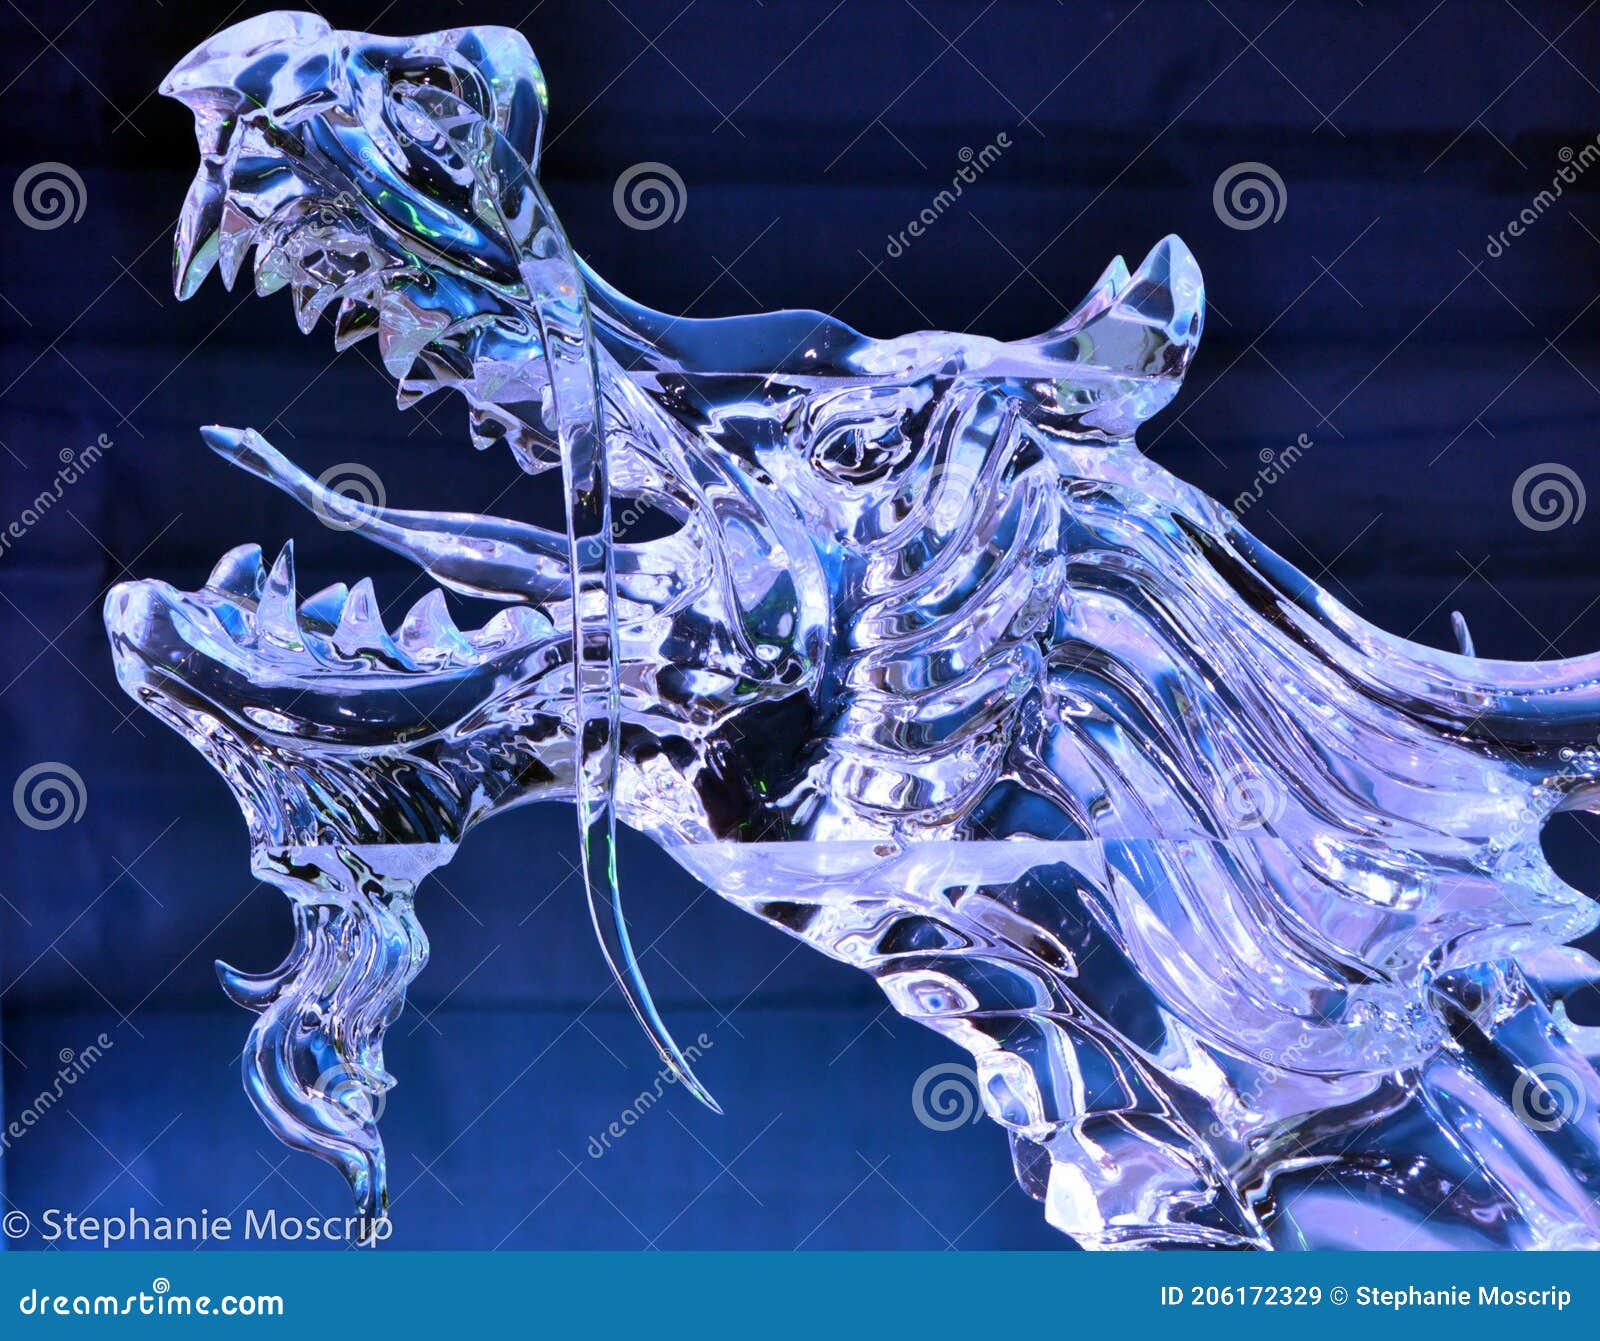 fierce roaring dragon ice sculpture with blue backgroud